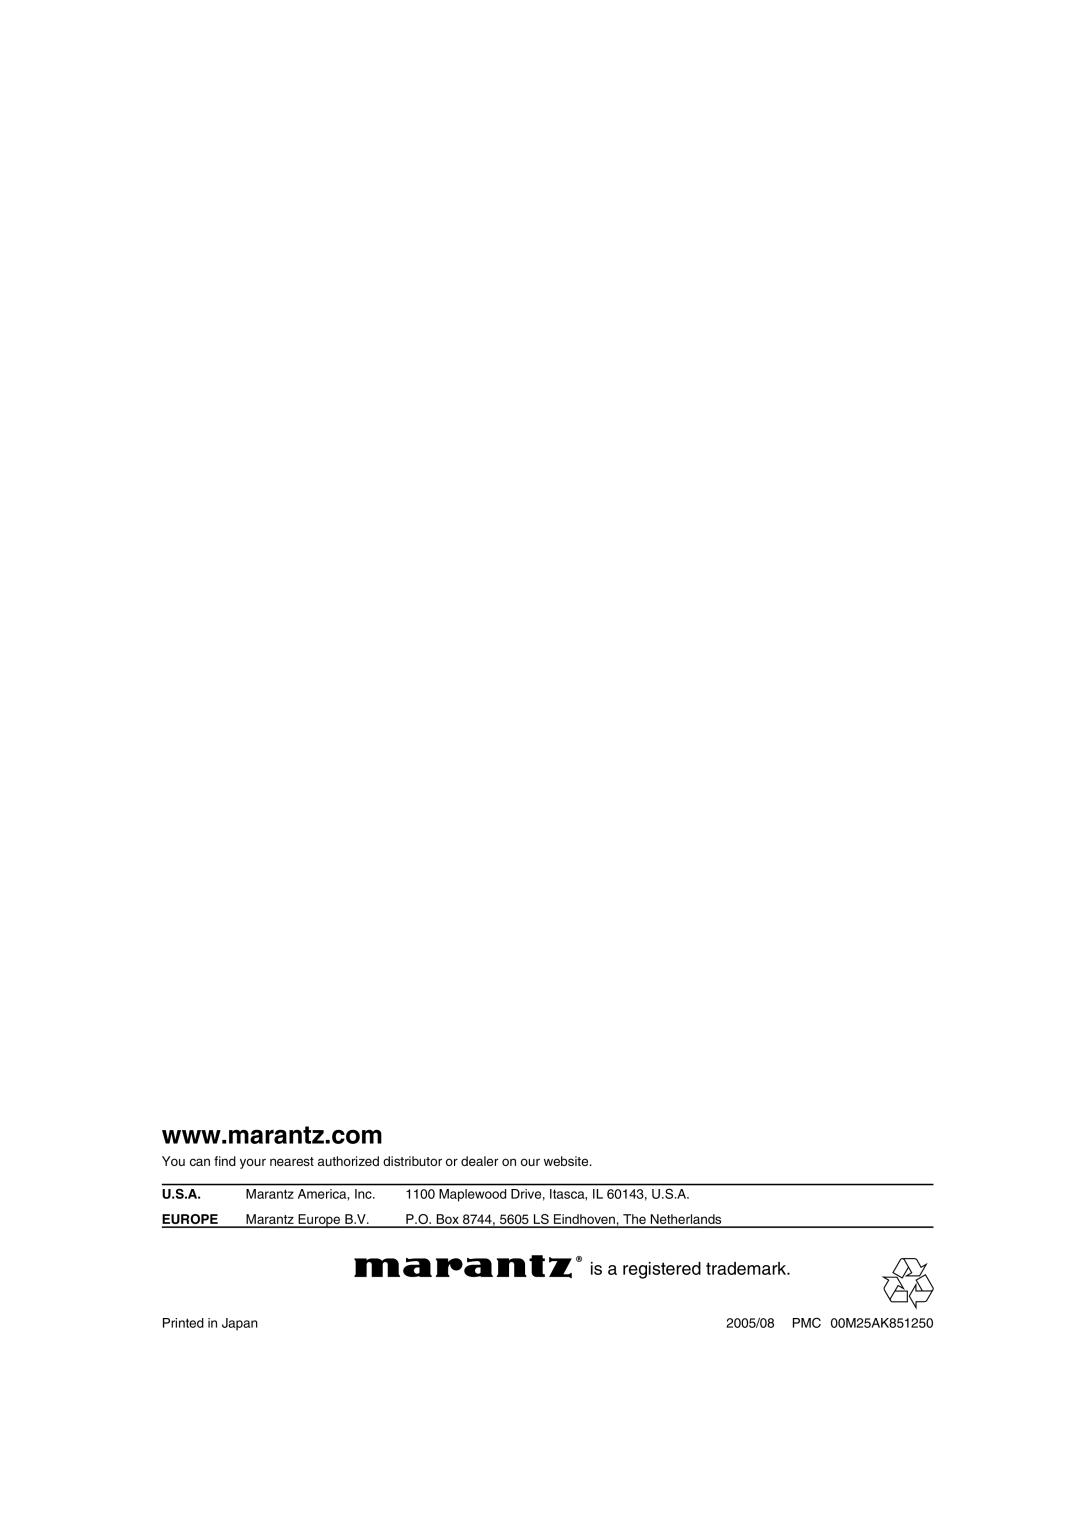 Marantz DV9600 manual is a registered trademark, Marantz America, Inc, Maplewood Drive, Itasca, IL 60143, U.S.A, Europe 